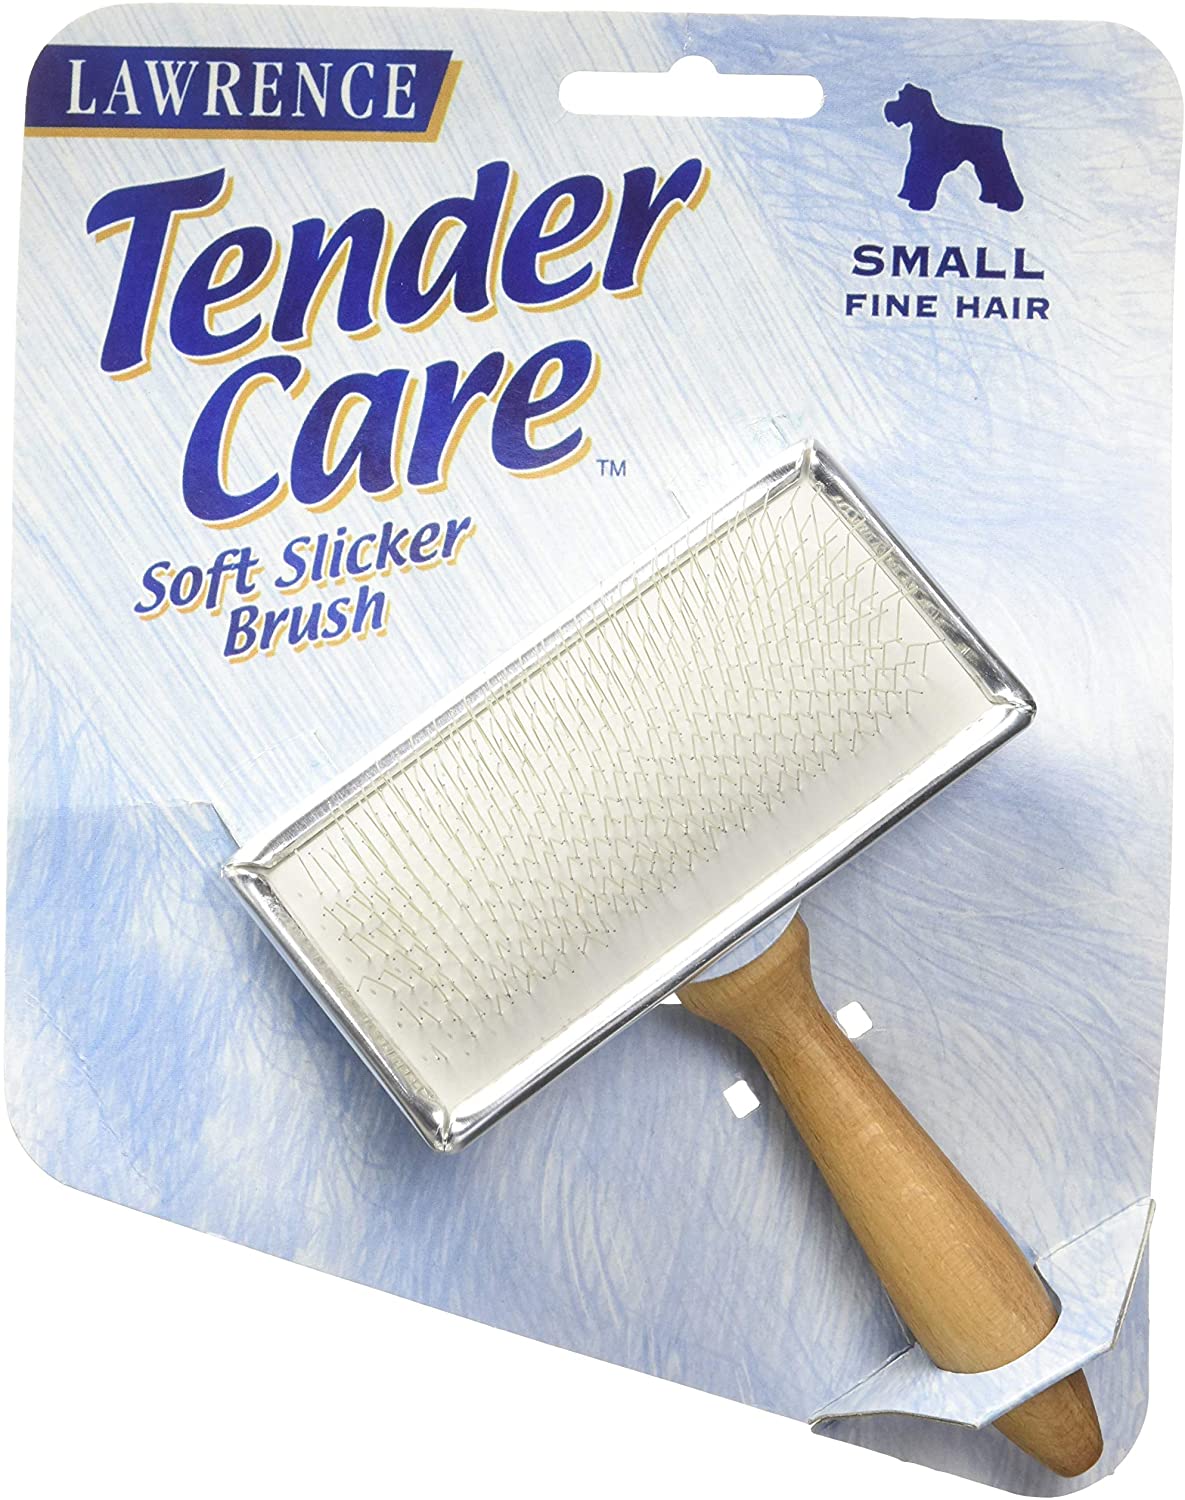  LAWRENCE Tender Care Slicker Cepillo, tamaño Mediano 